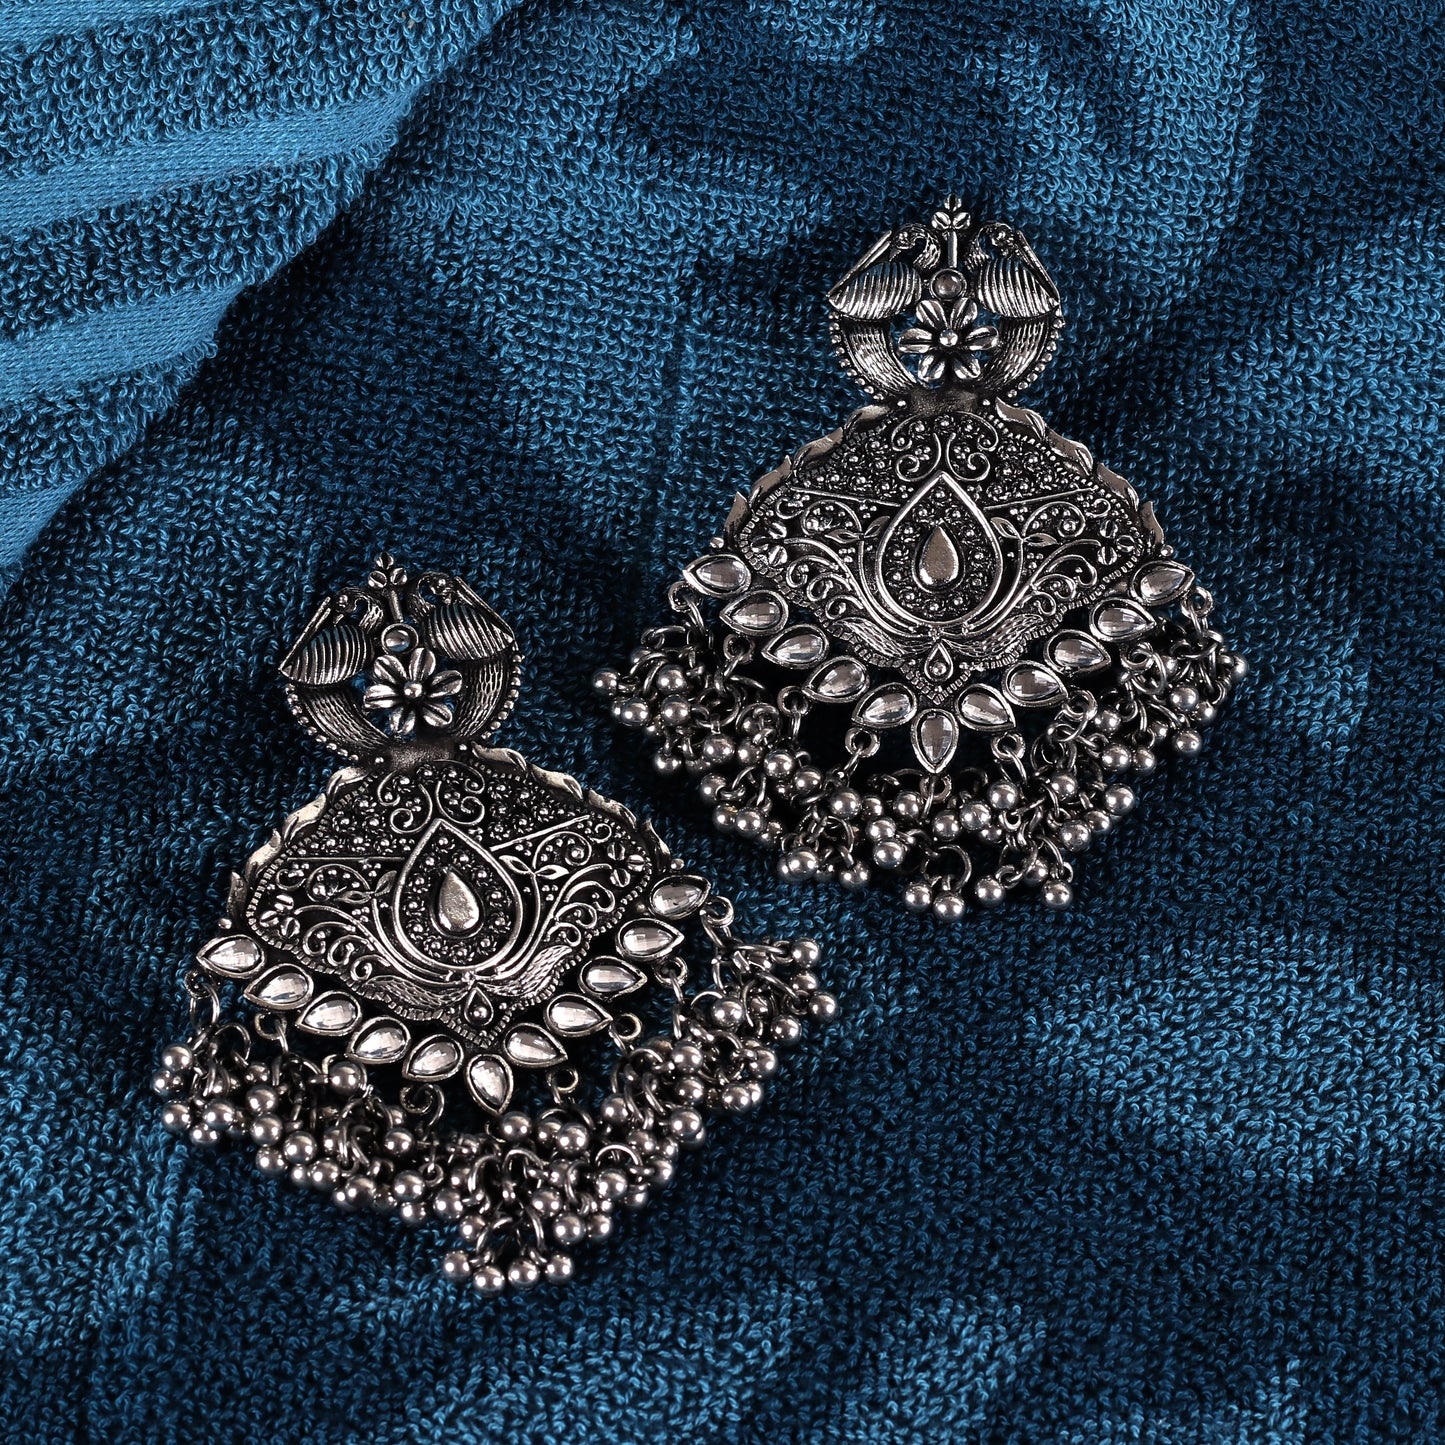 Oxidized Silver Ethnic Designer Earrings